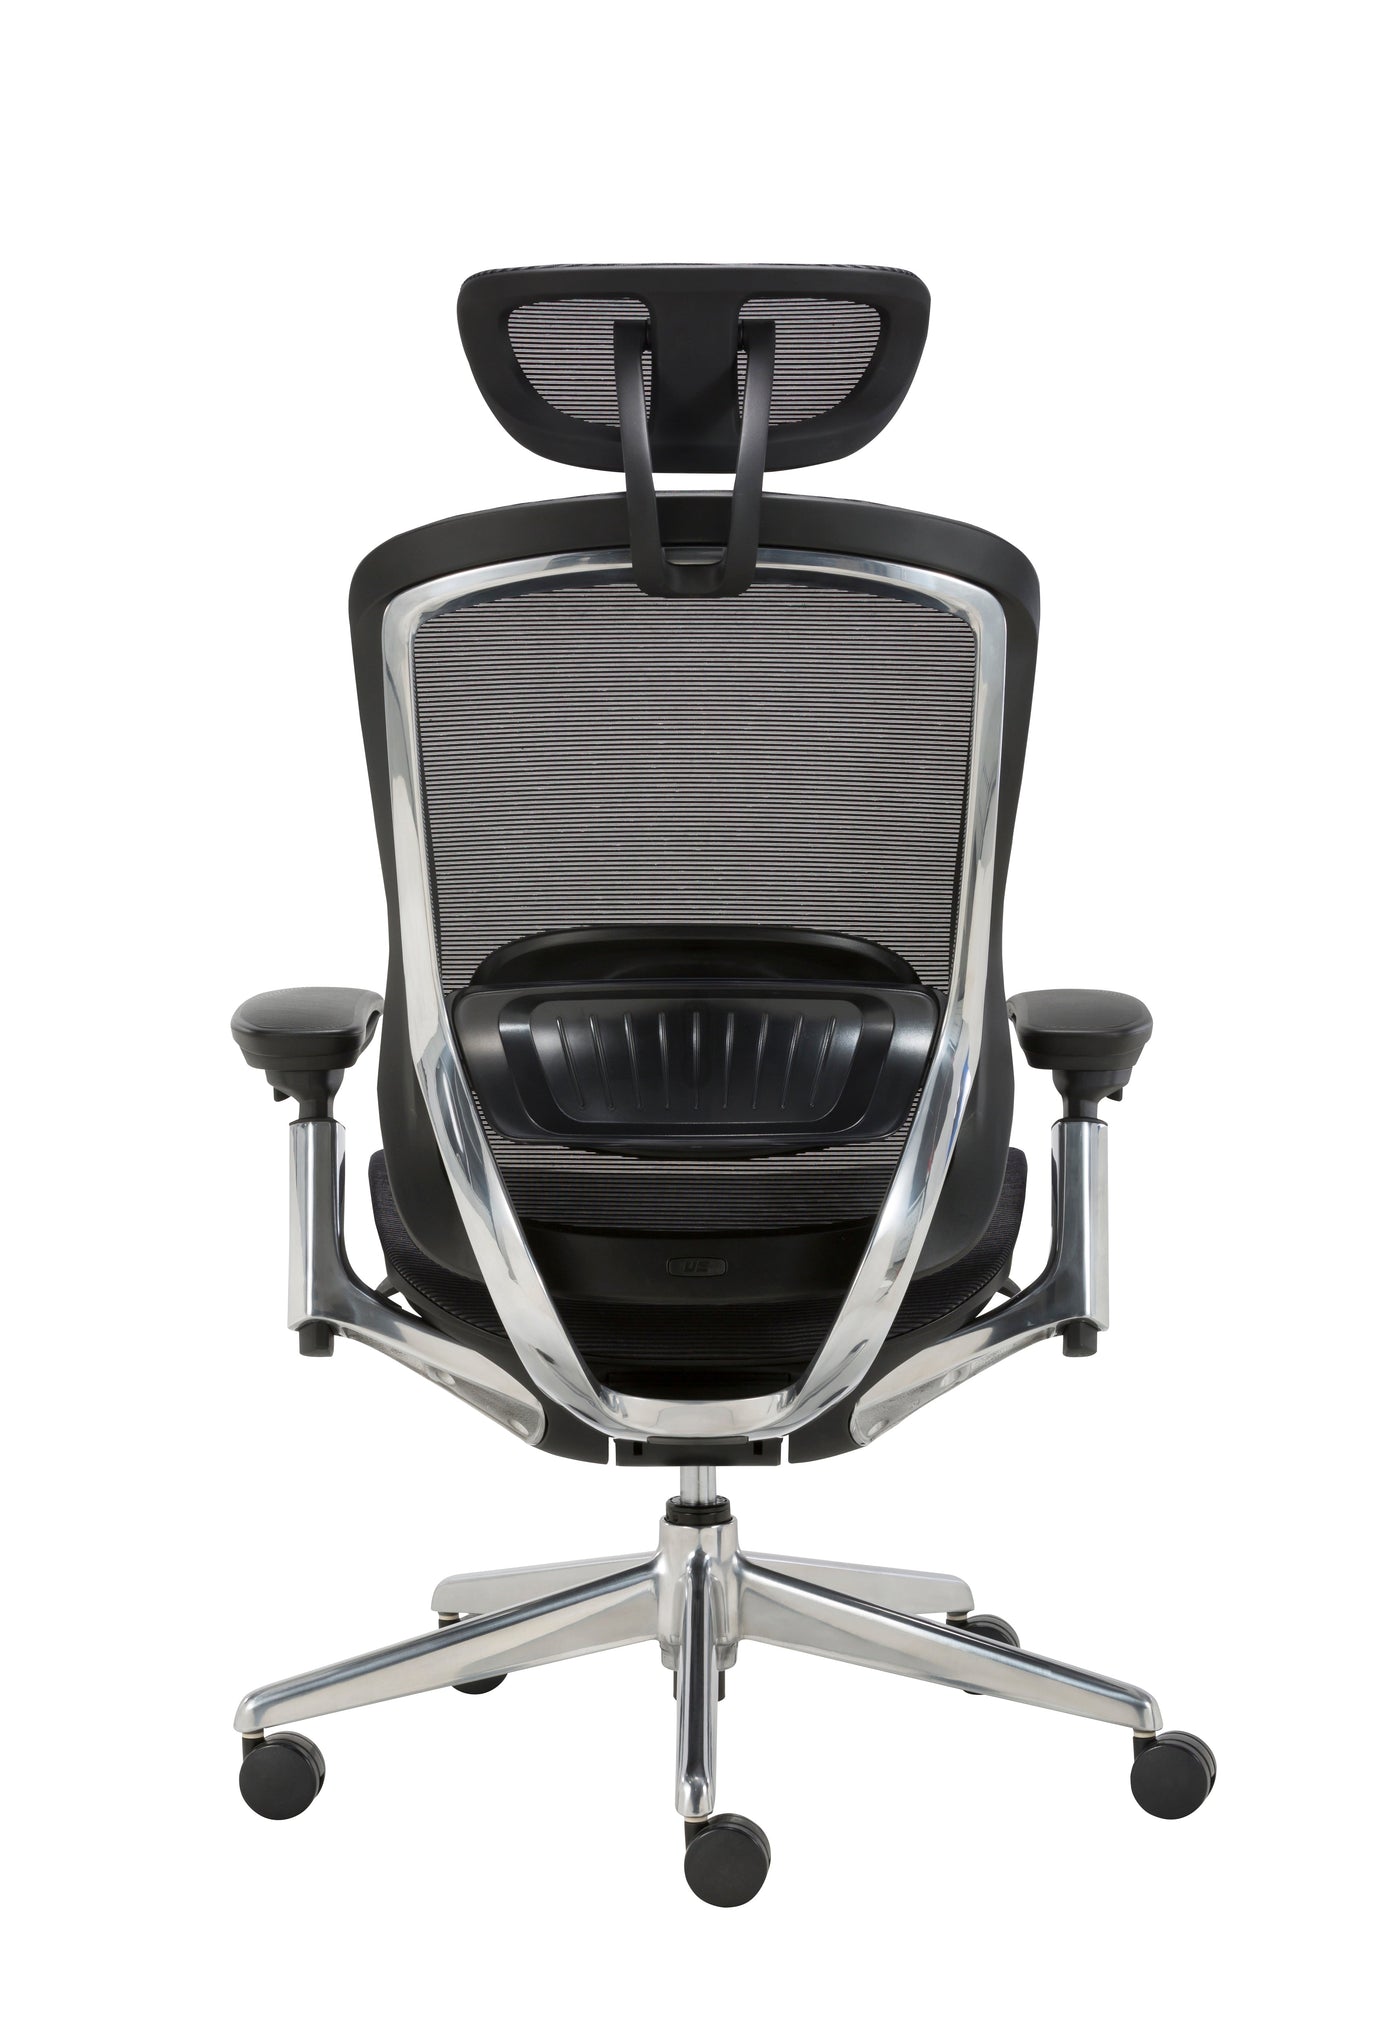 CeliniChair - Office Chair by EFFYDESK